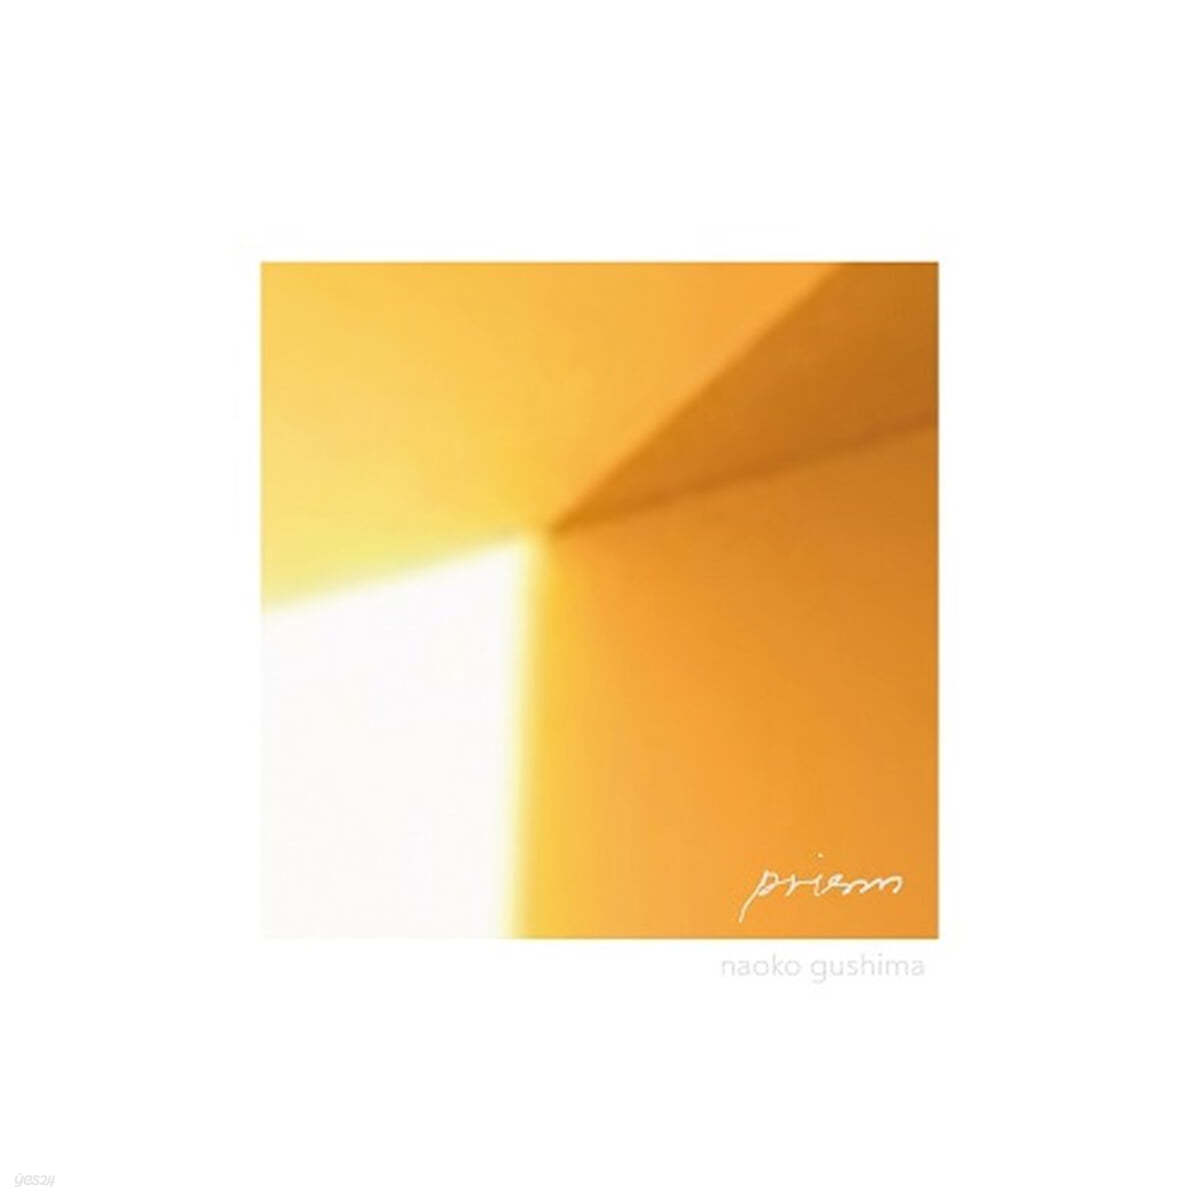 Gushima Naoko (구시마 나오코) - Prism [LP]